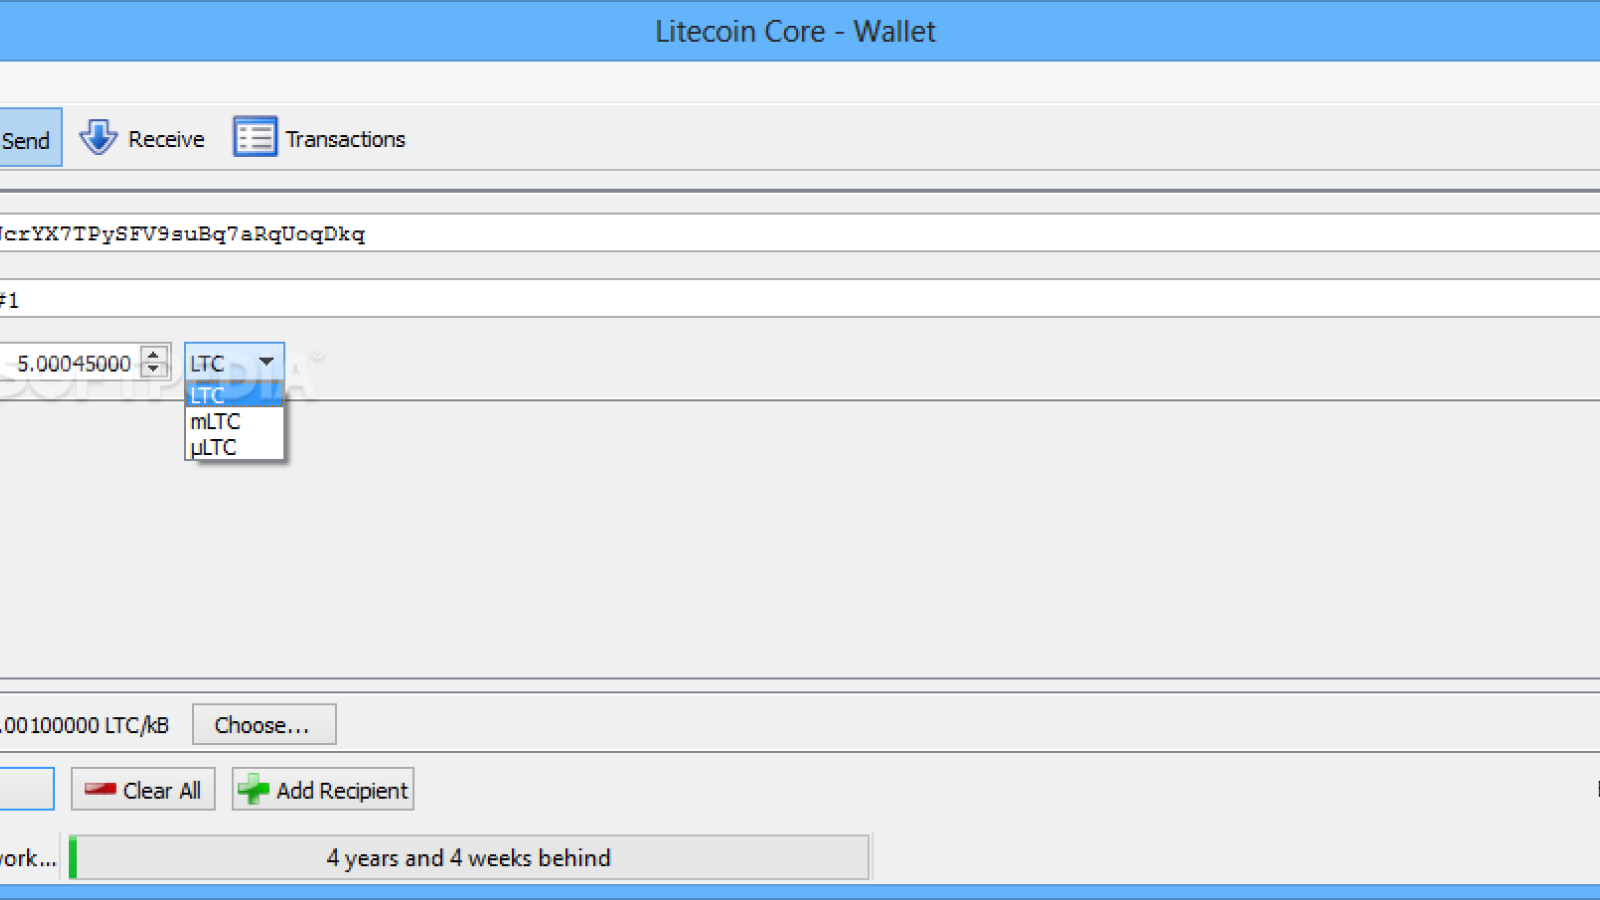 Litecoin Core’s desktop interface is minimalistic